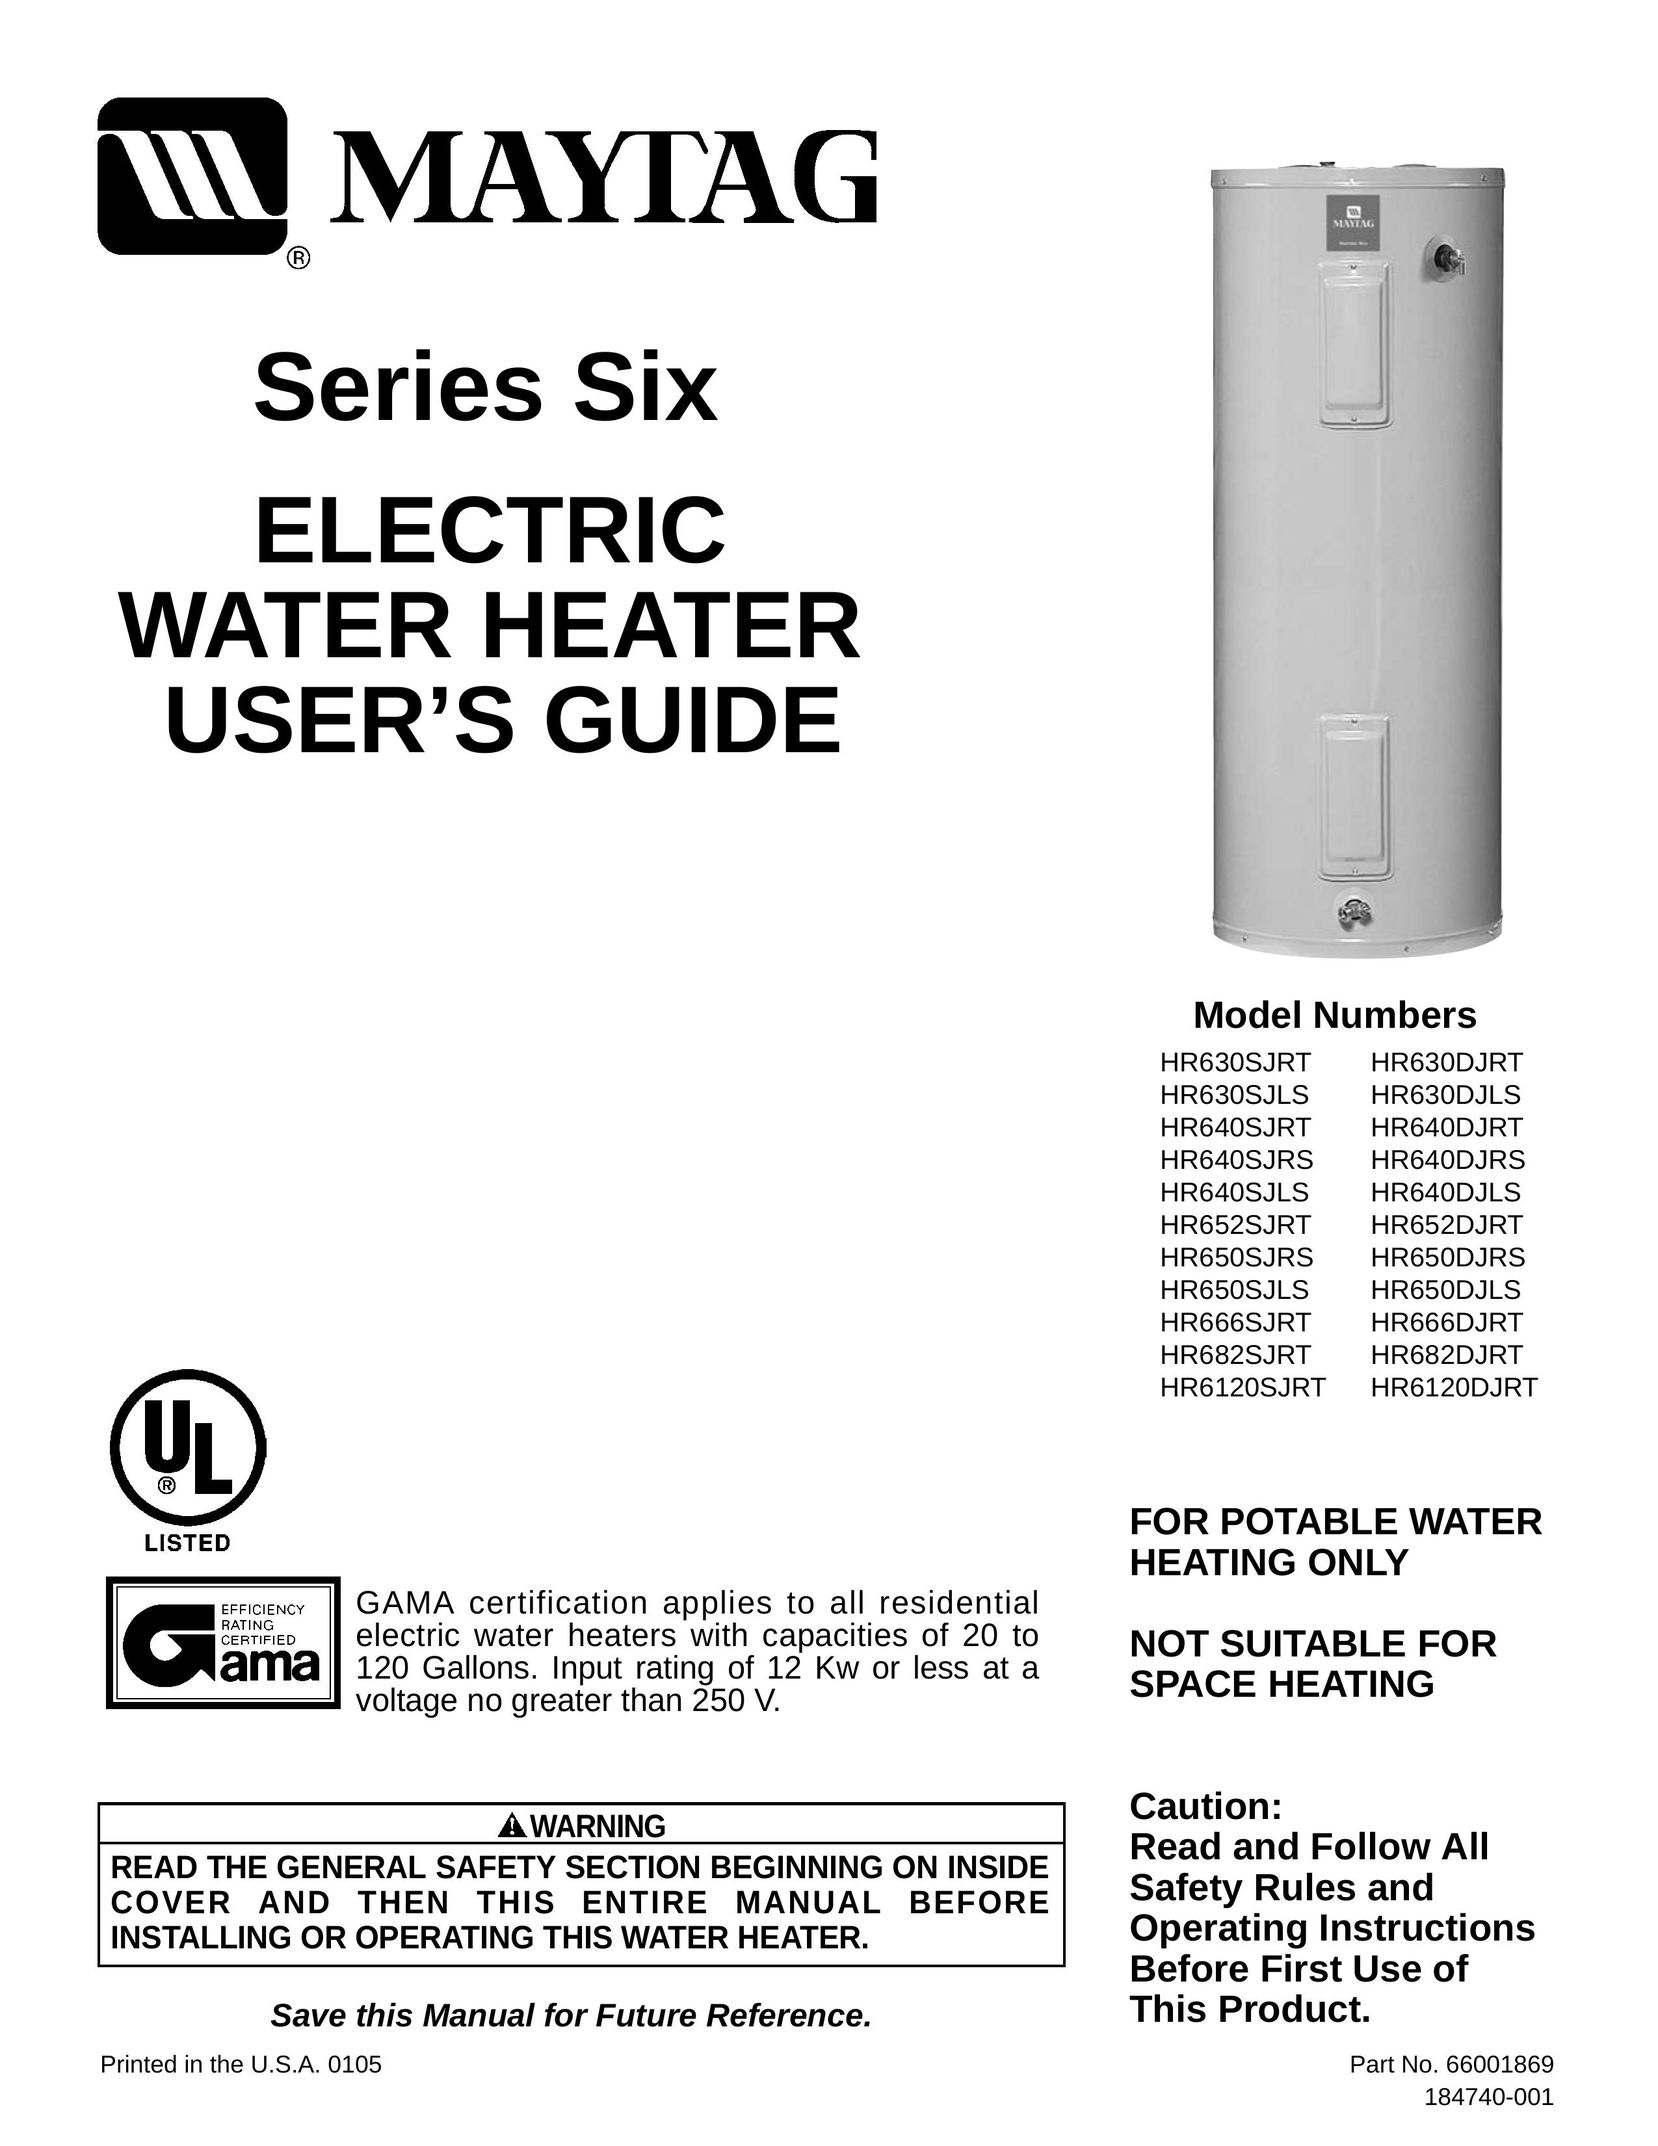 Maytag HR640DJLS Water Heater User Manual